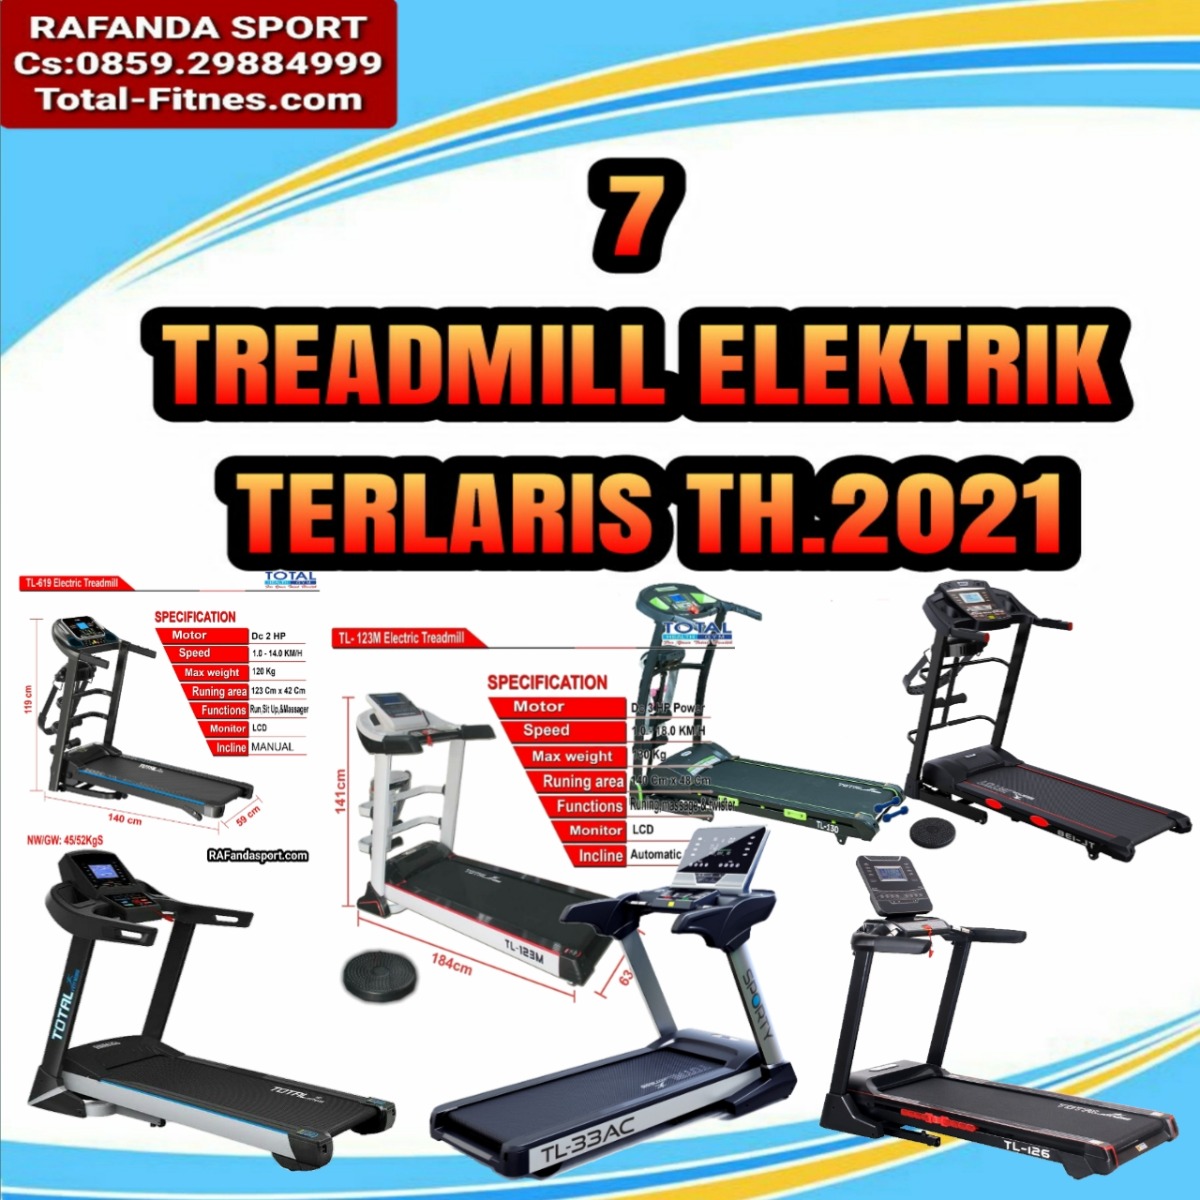 7 Treadmill Elektrik Paling Laris Awal Th.2021